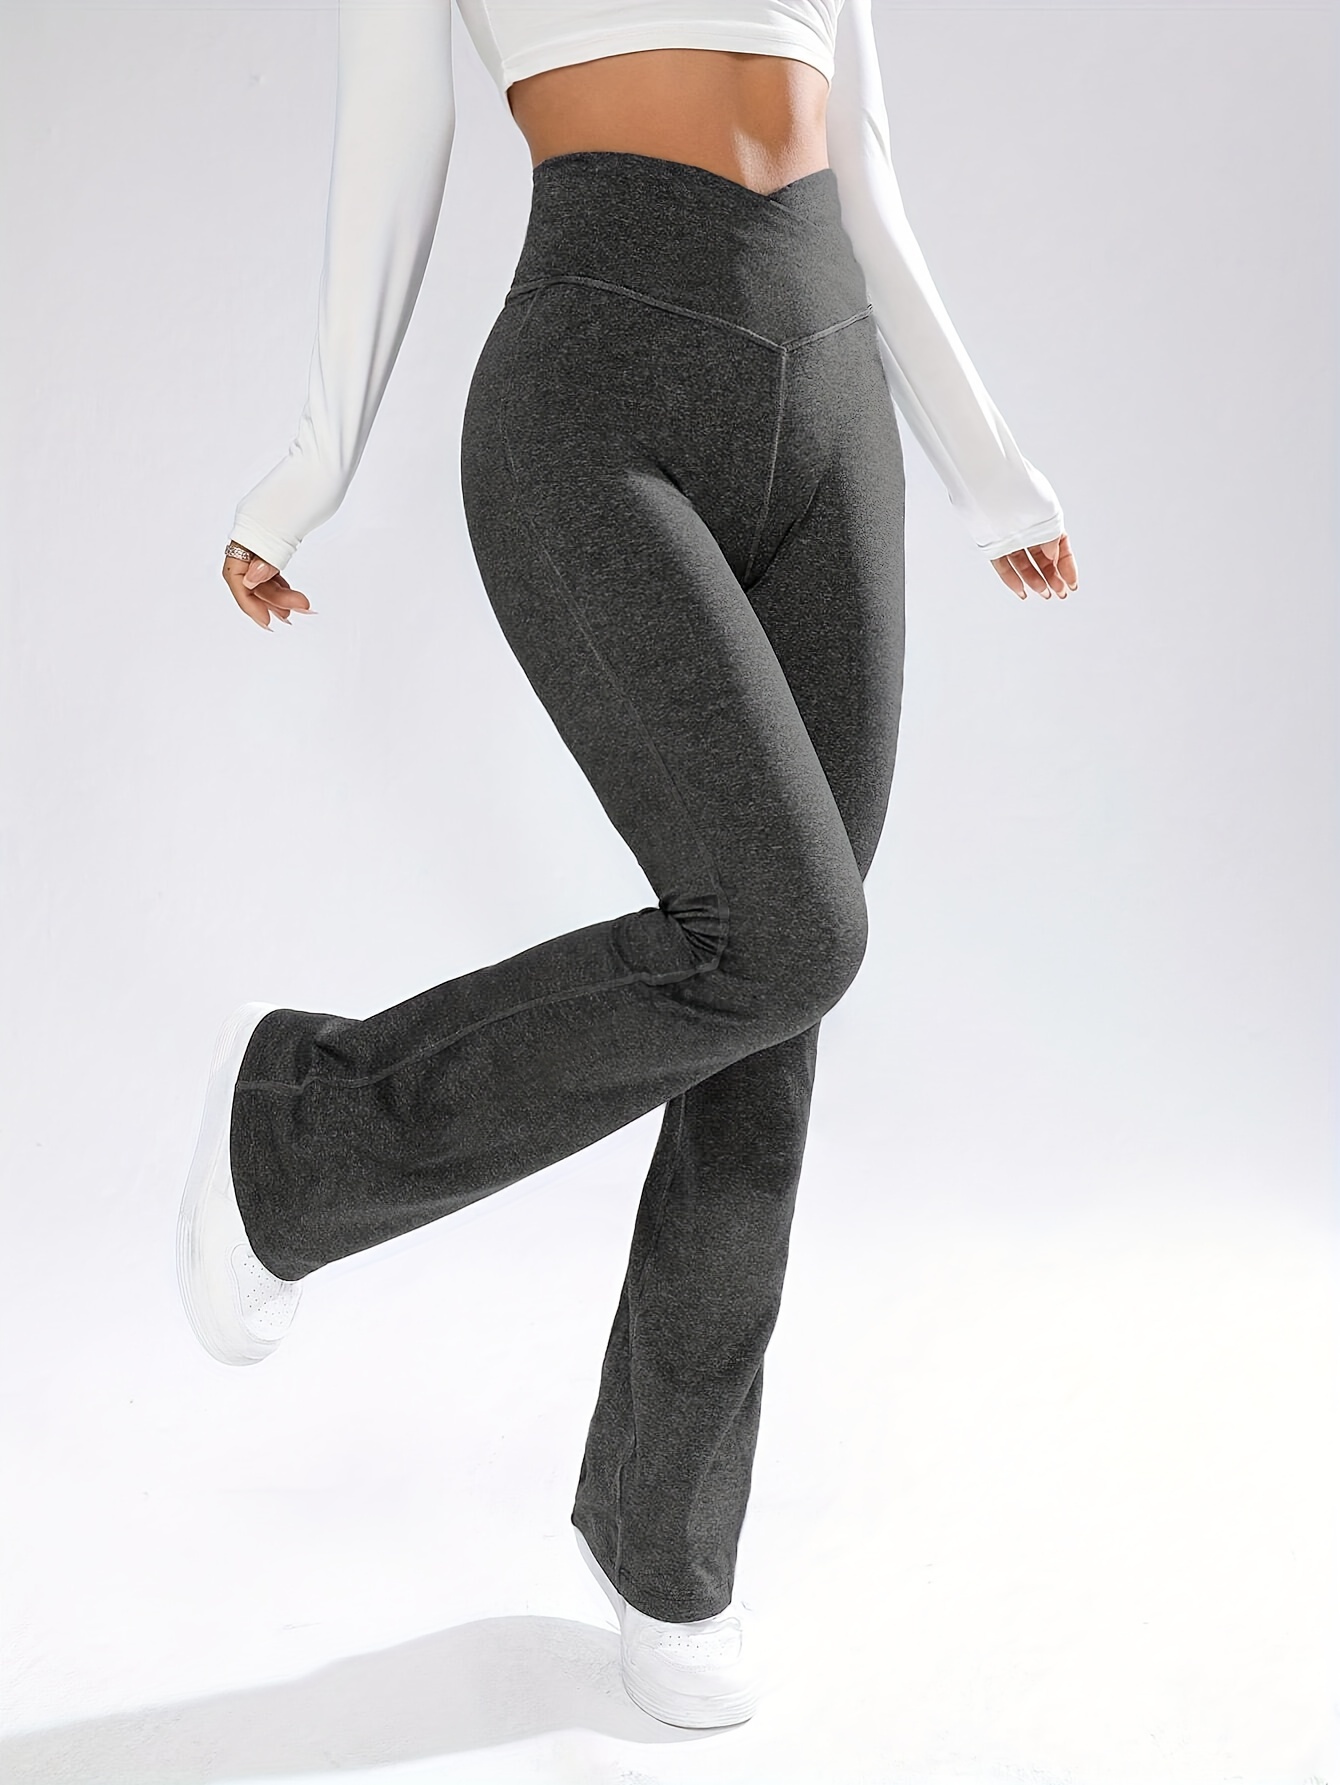 Women’s gray melange leggings with mixed stitching